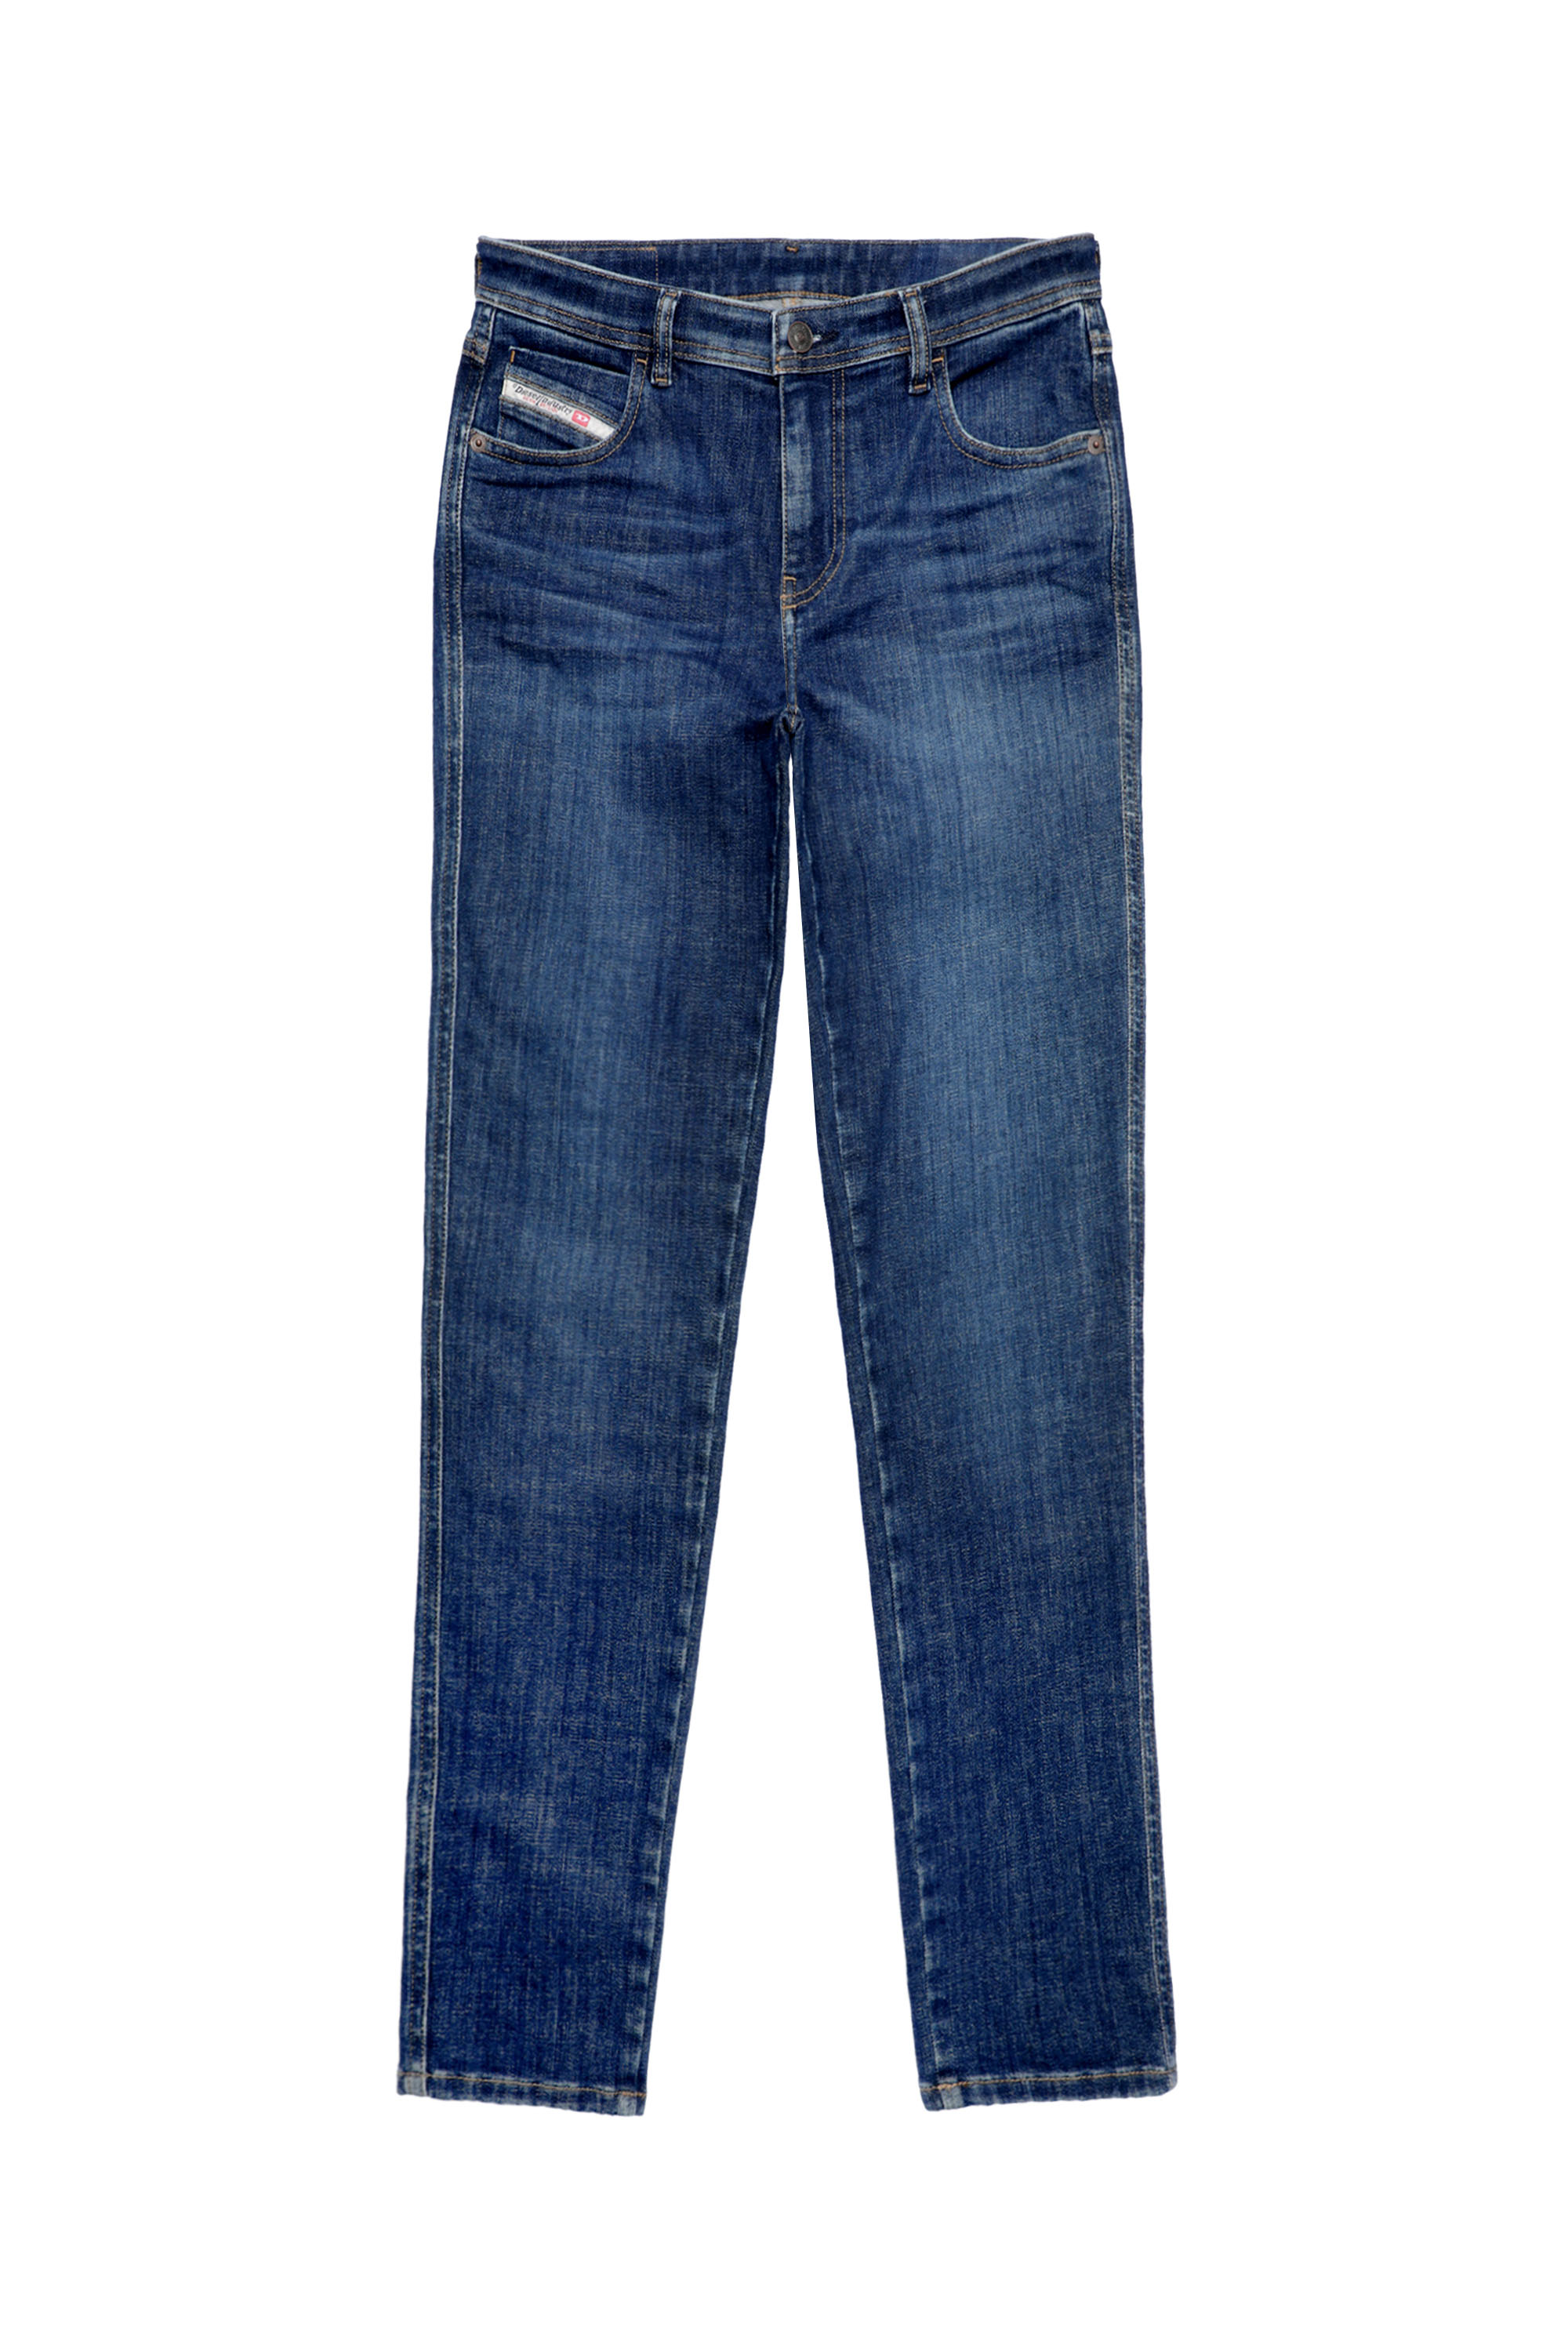 Skinny Jeans 2015 Babhila 09C58, Dark Blue - Jeans